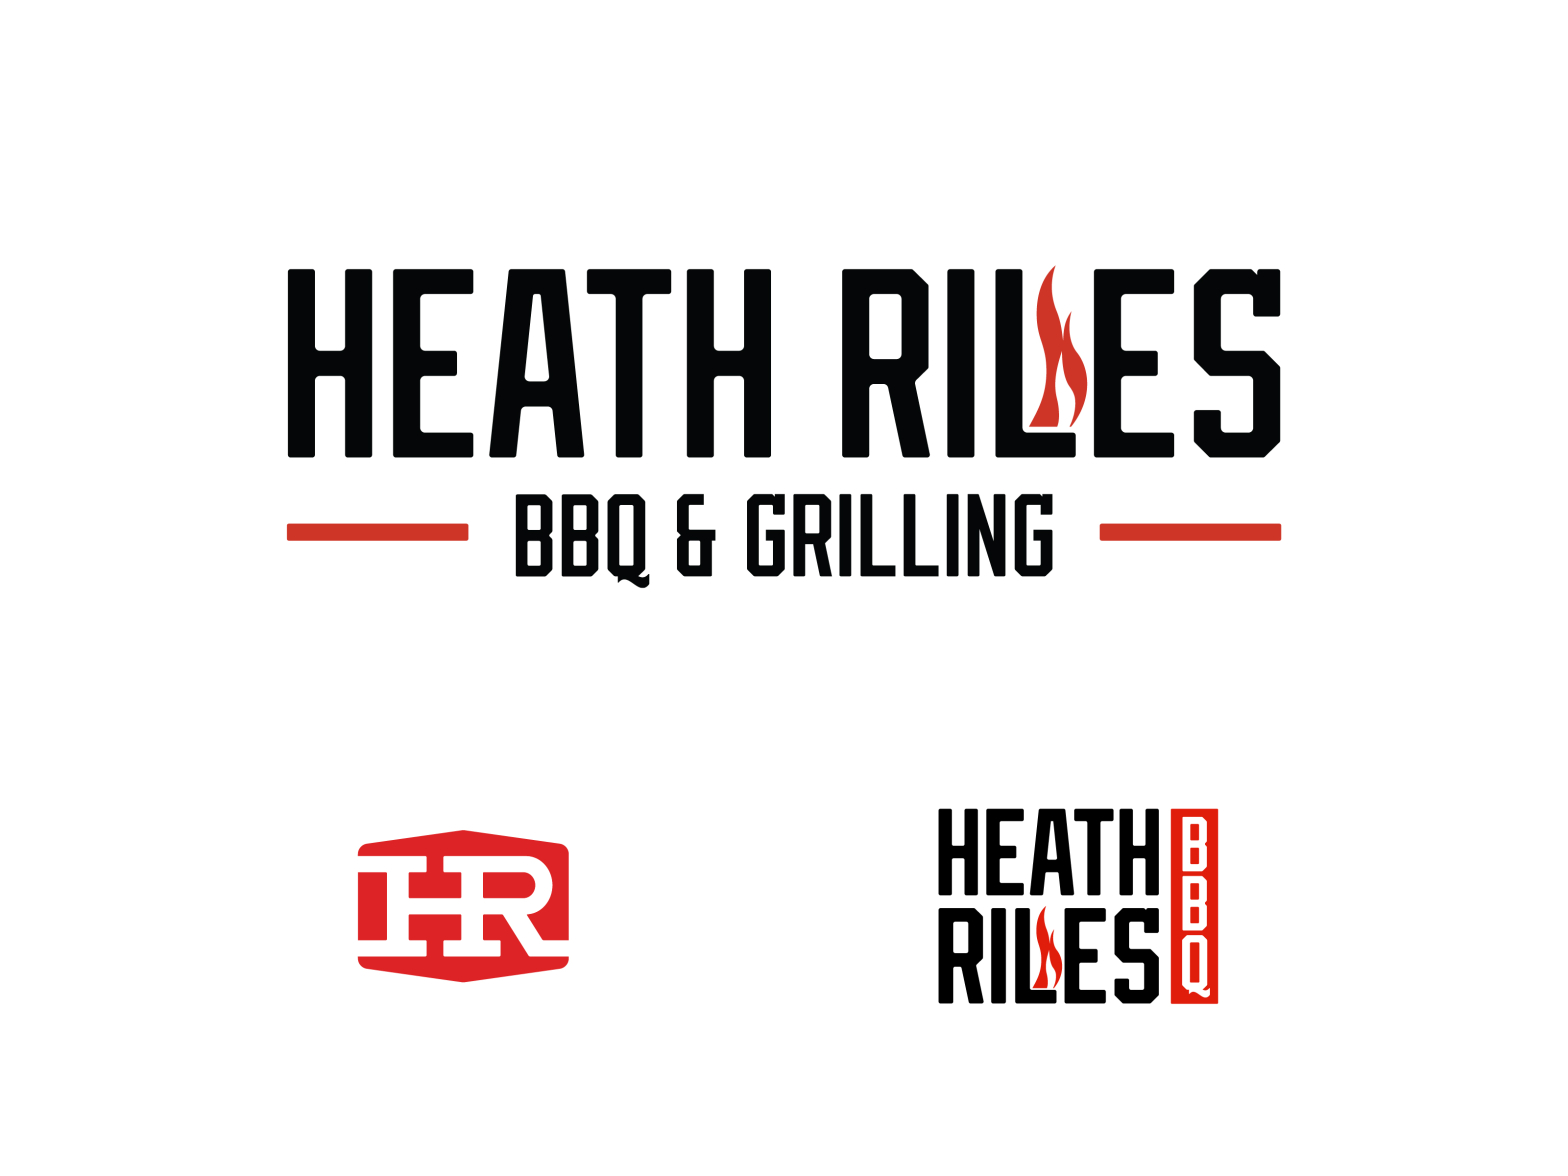 Heath Riles BBQ by Chris Porter on Dribbble